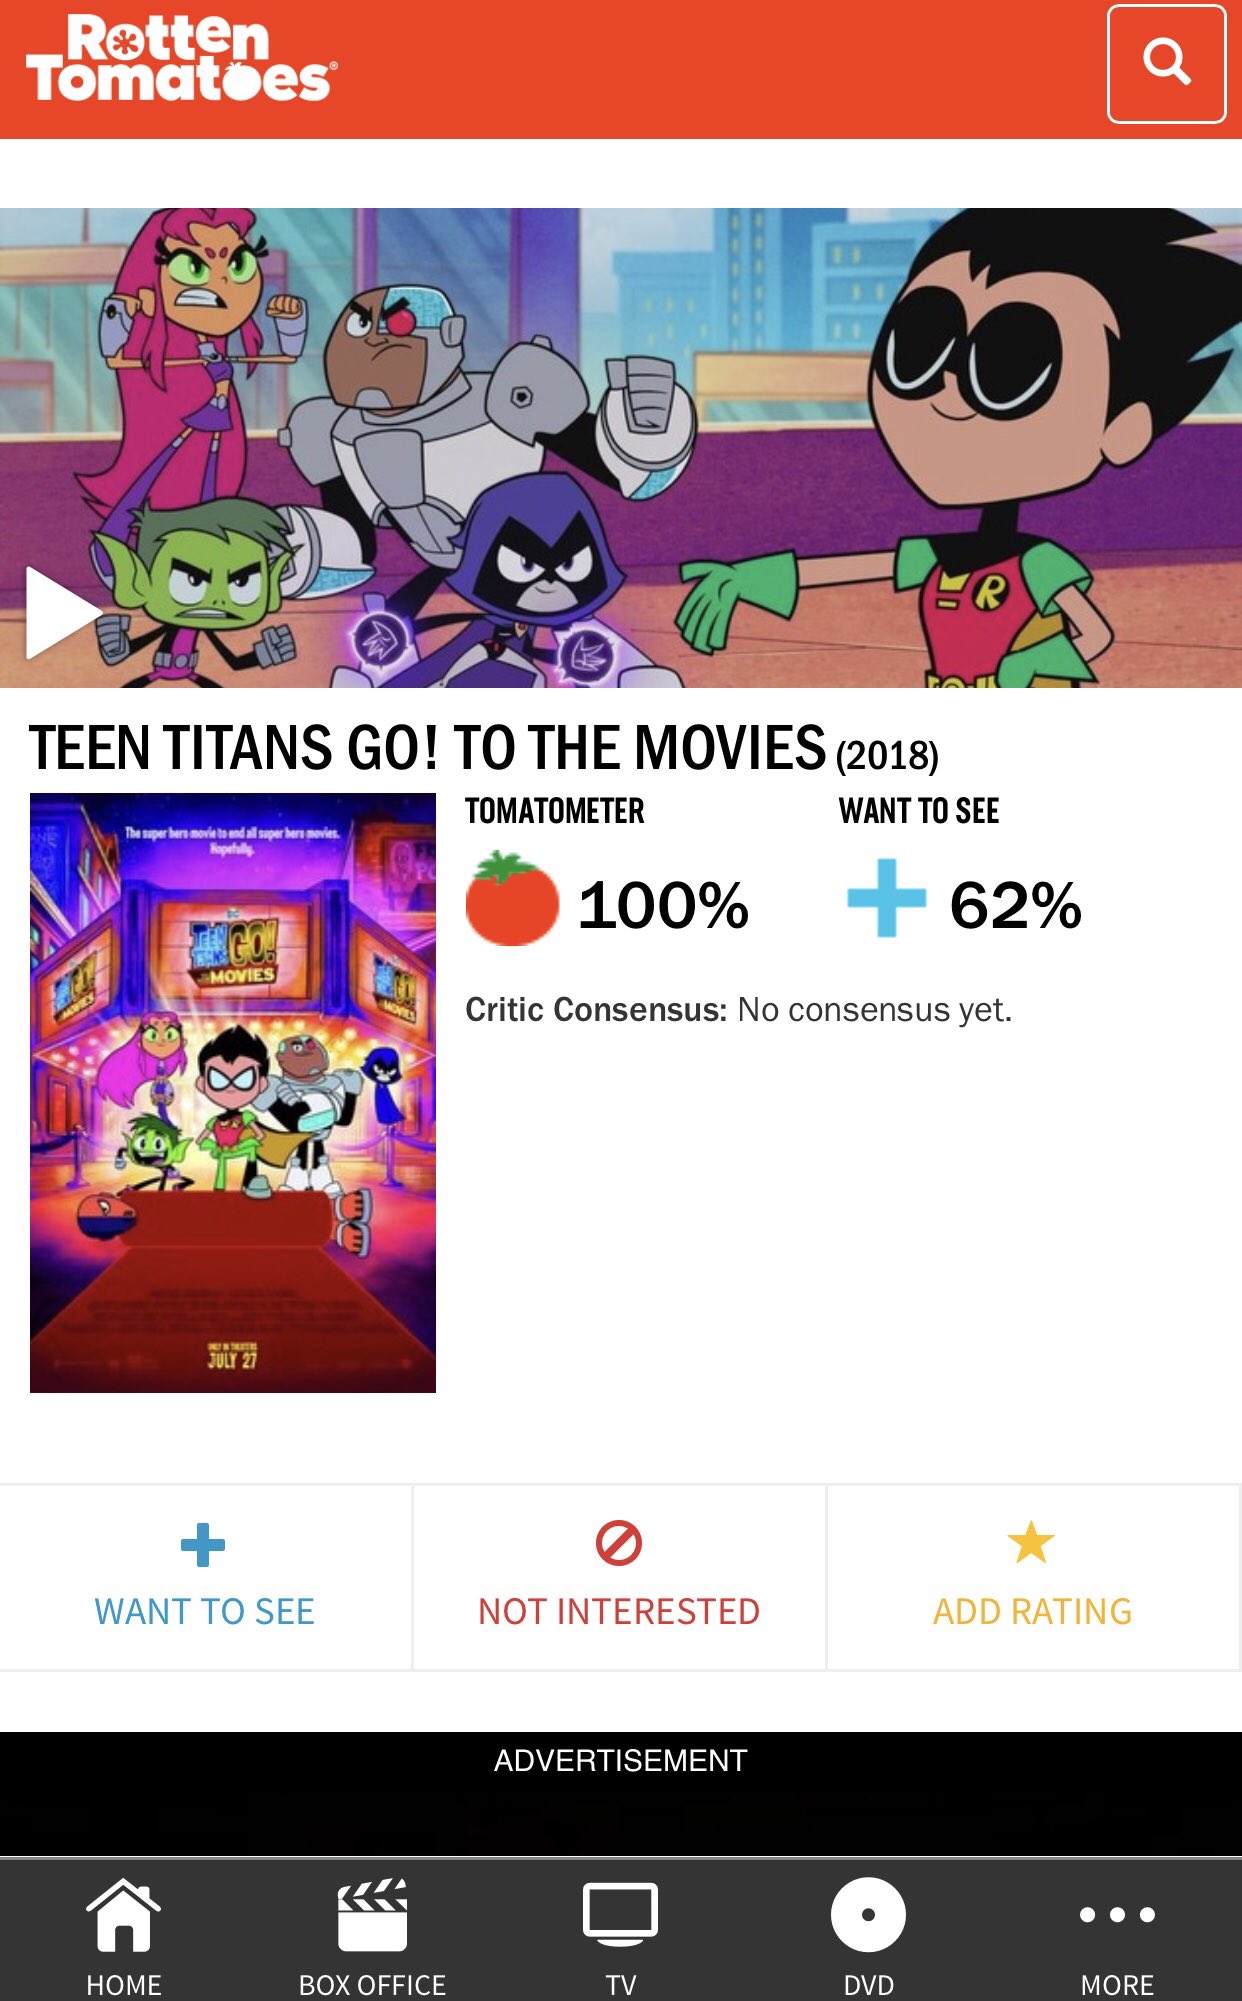 Titans - Rotten Tomatoes